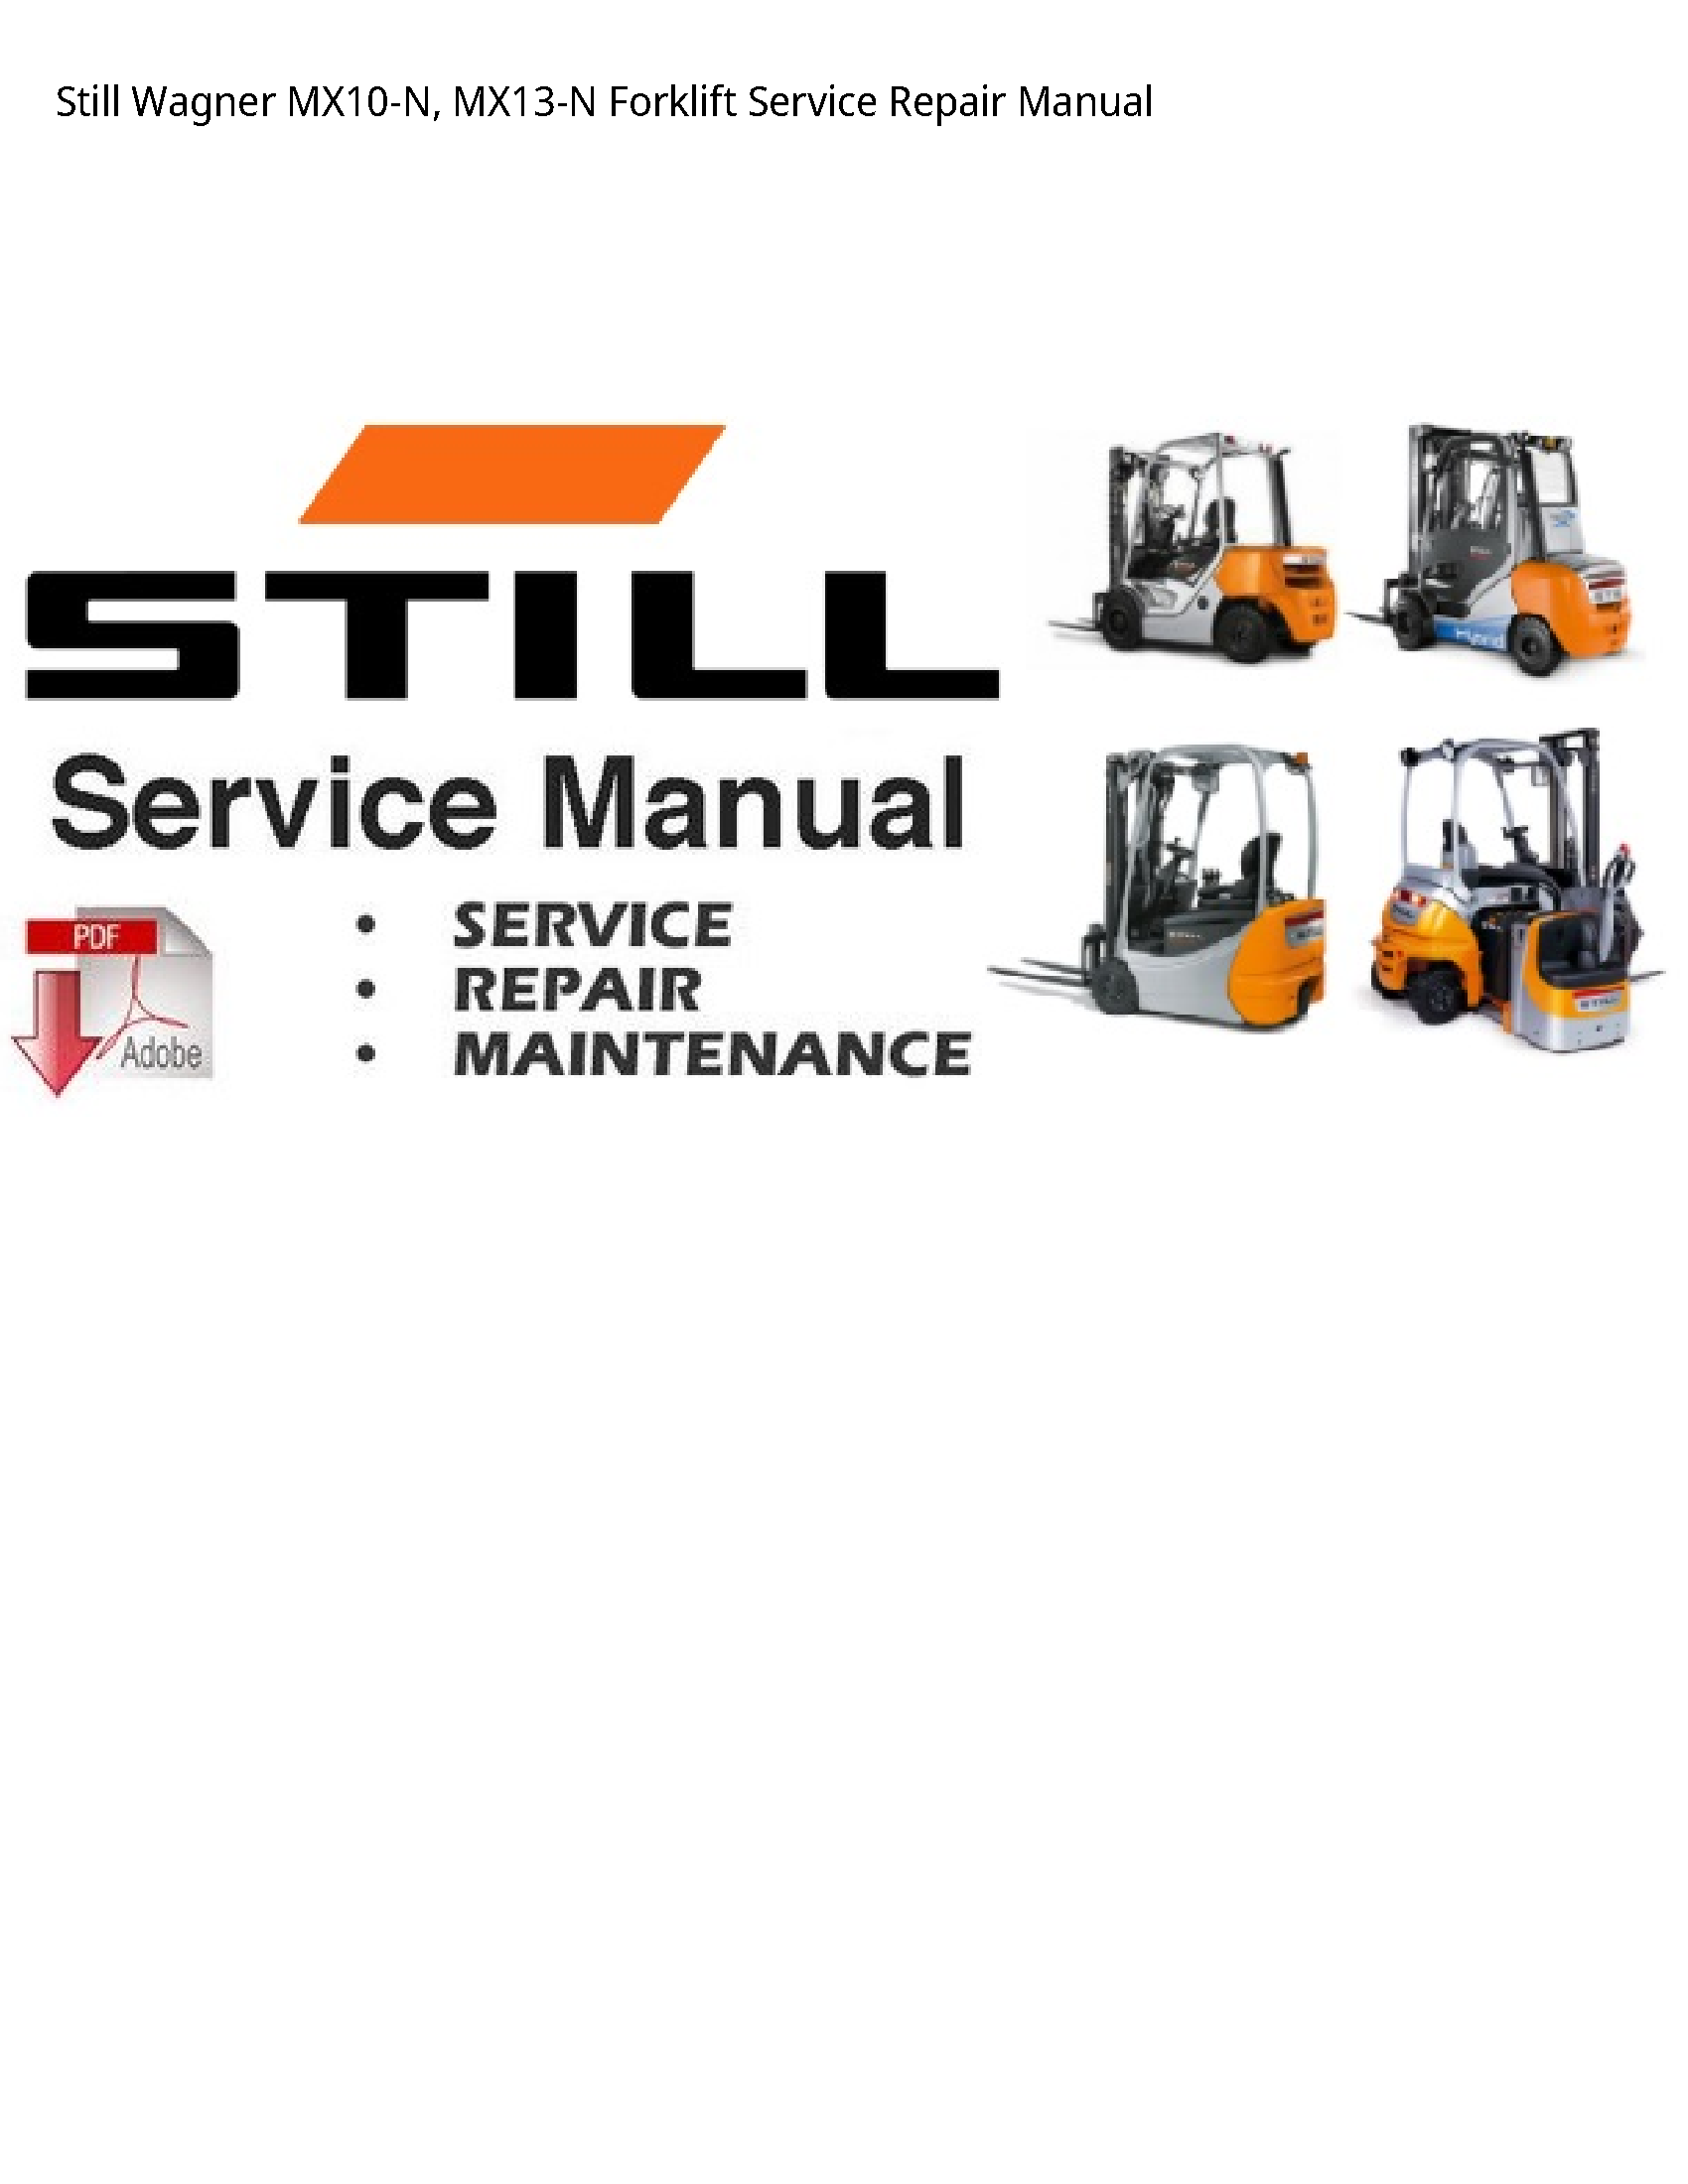 Still Wagner Mx10 N Mx13 N Forklift Service Repair Manual